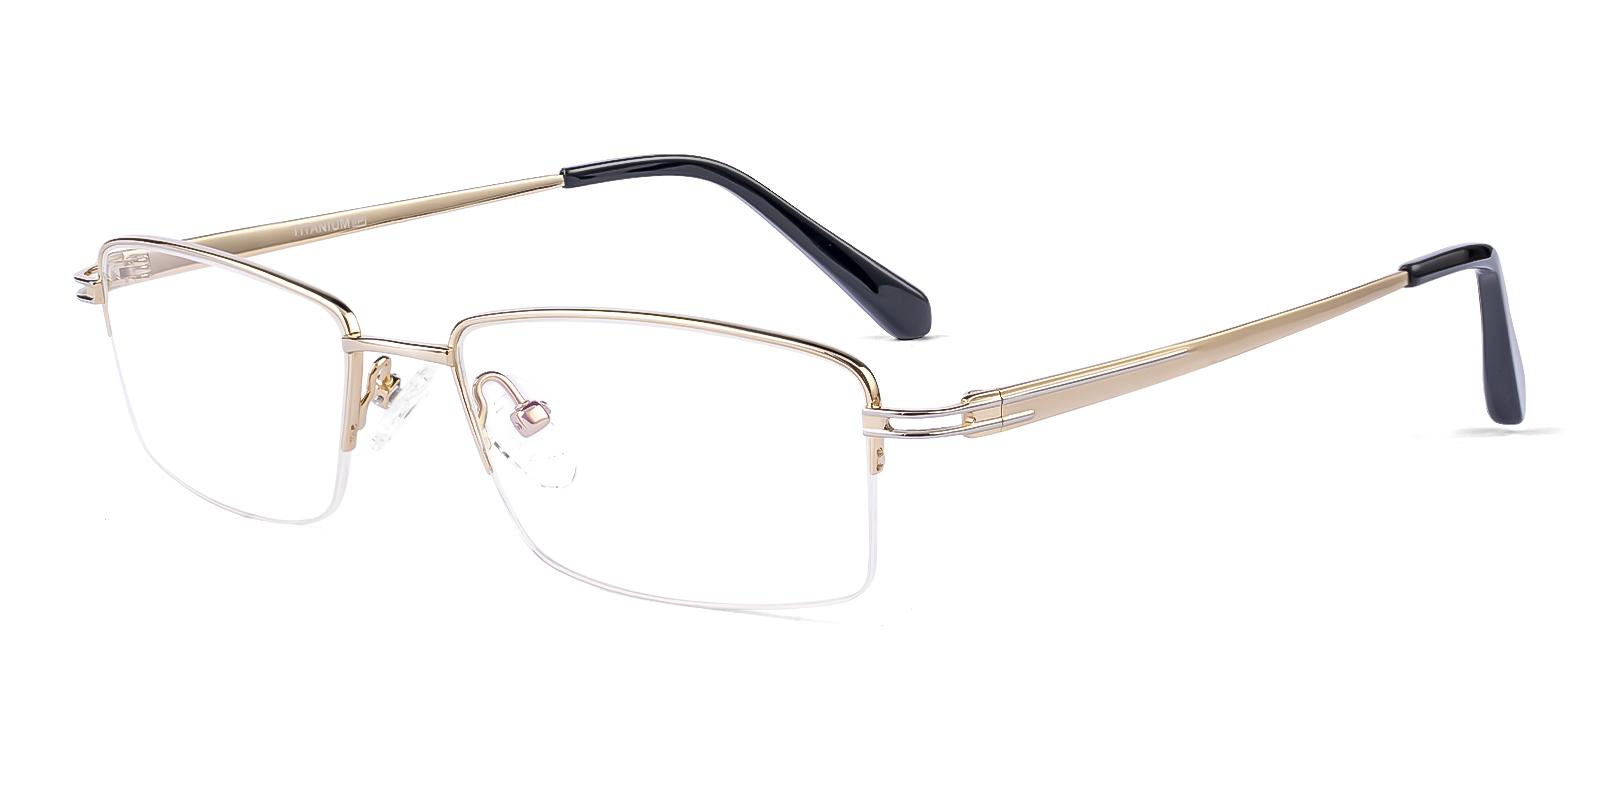 Tingine Gold Titanium Eyeglasses , NosePads Frames from ABBE Glasses